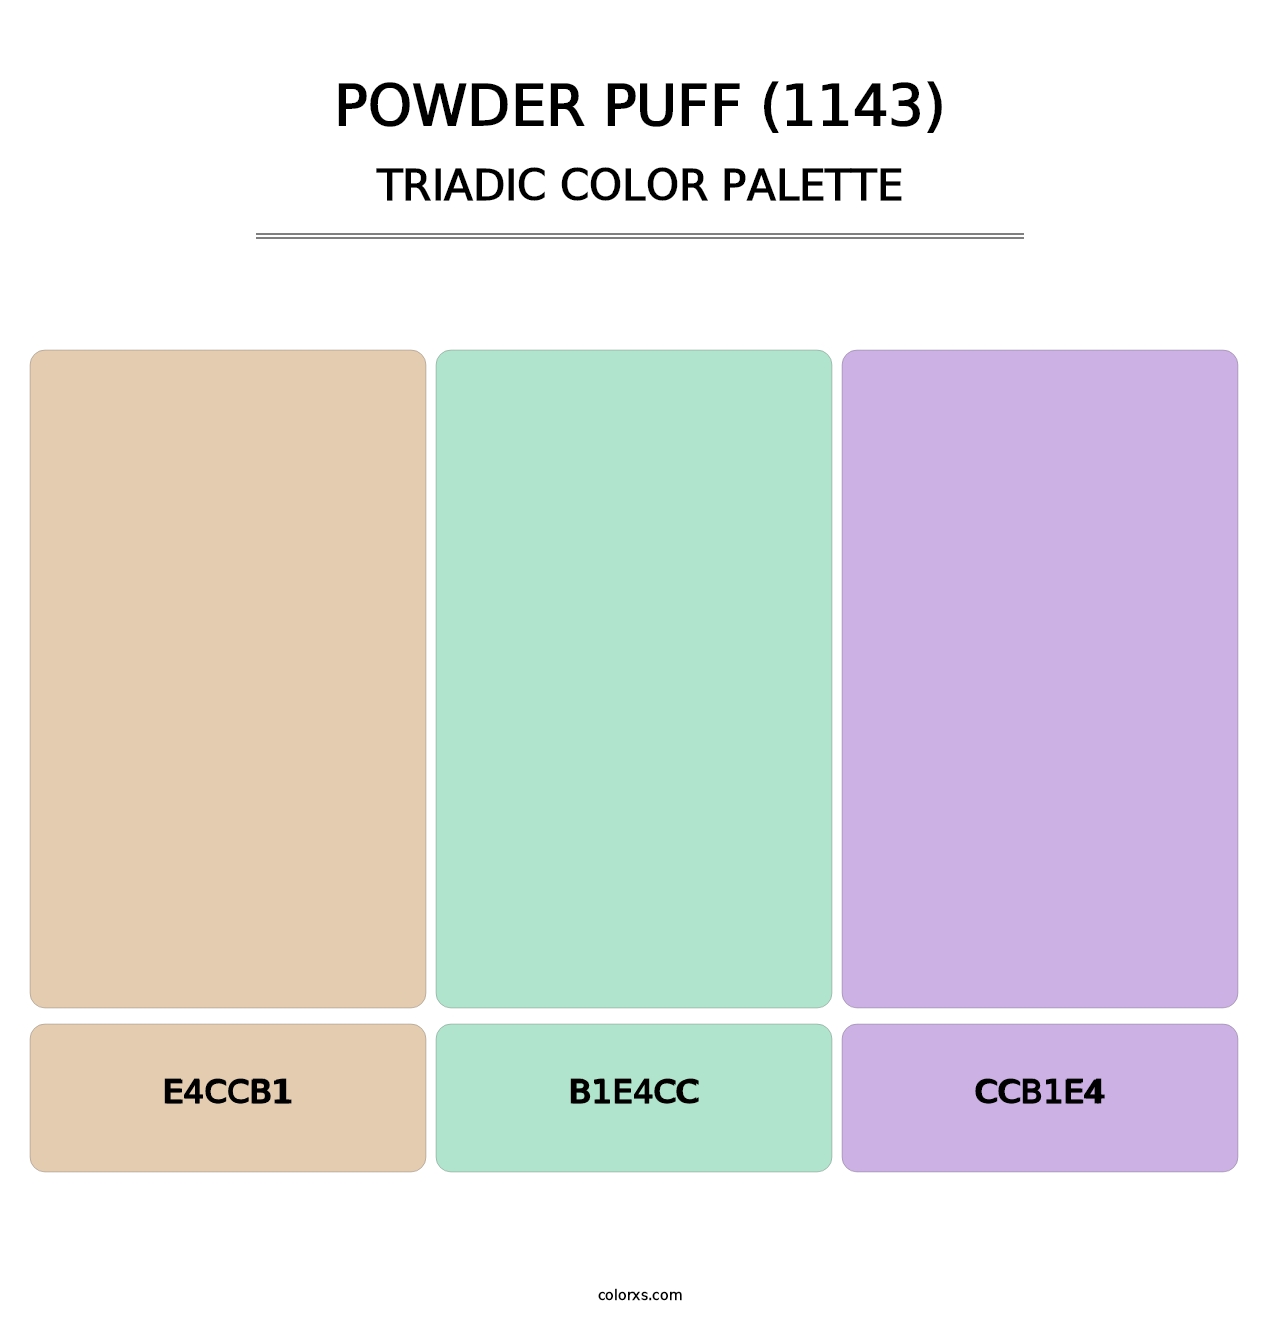 Powder Puff (1143) - Triadic Color Palette